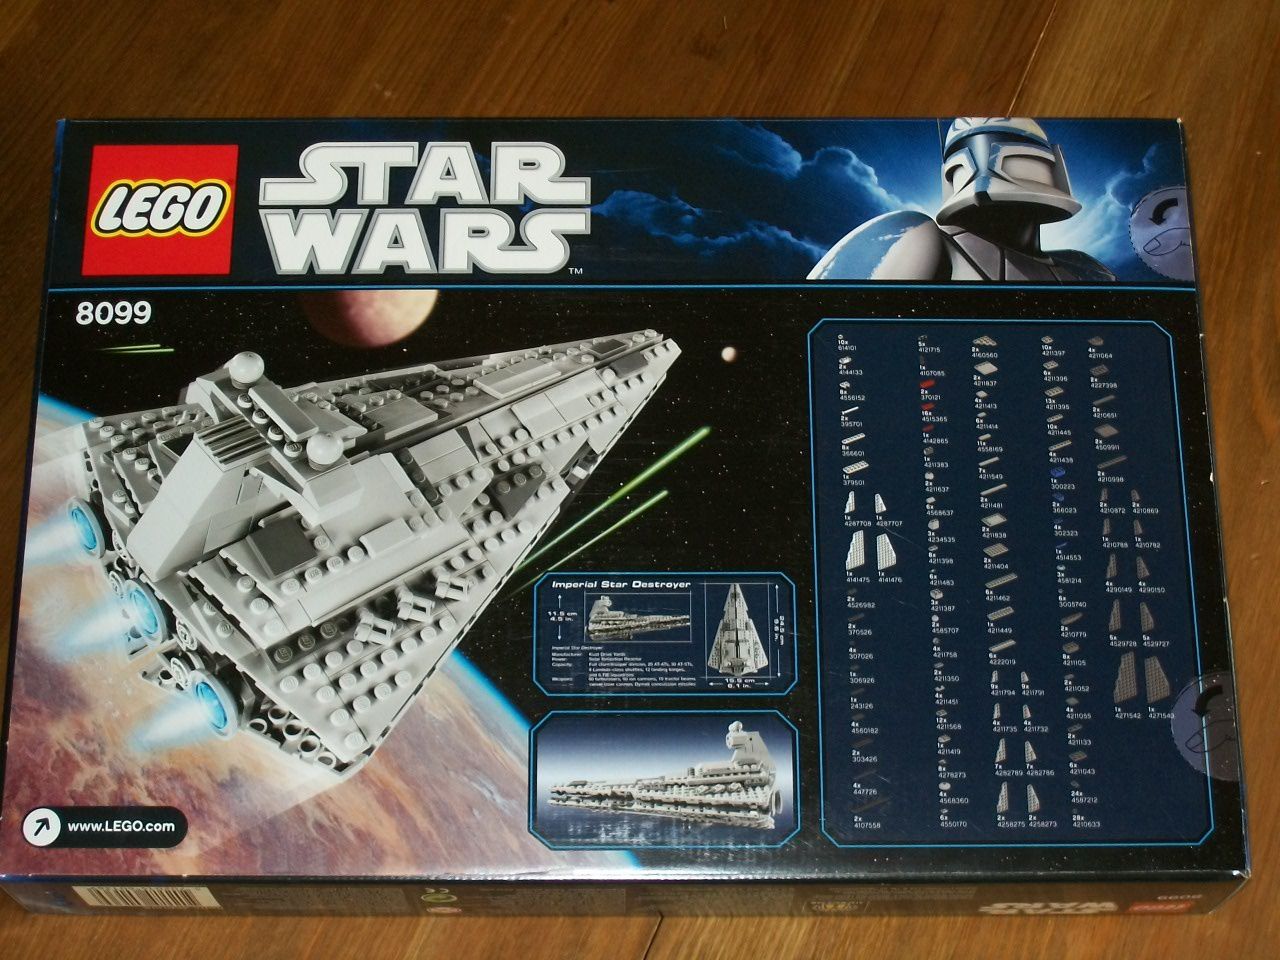 Revue du set Lego Star Wars 8099 - Lego(R) by Alkinoos